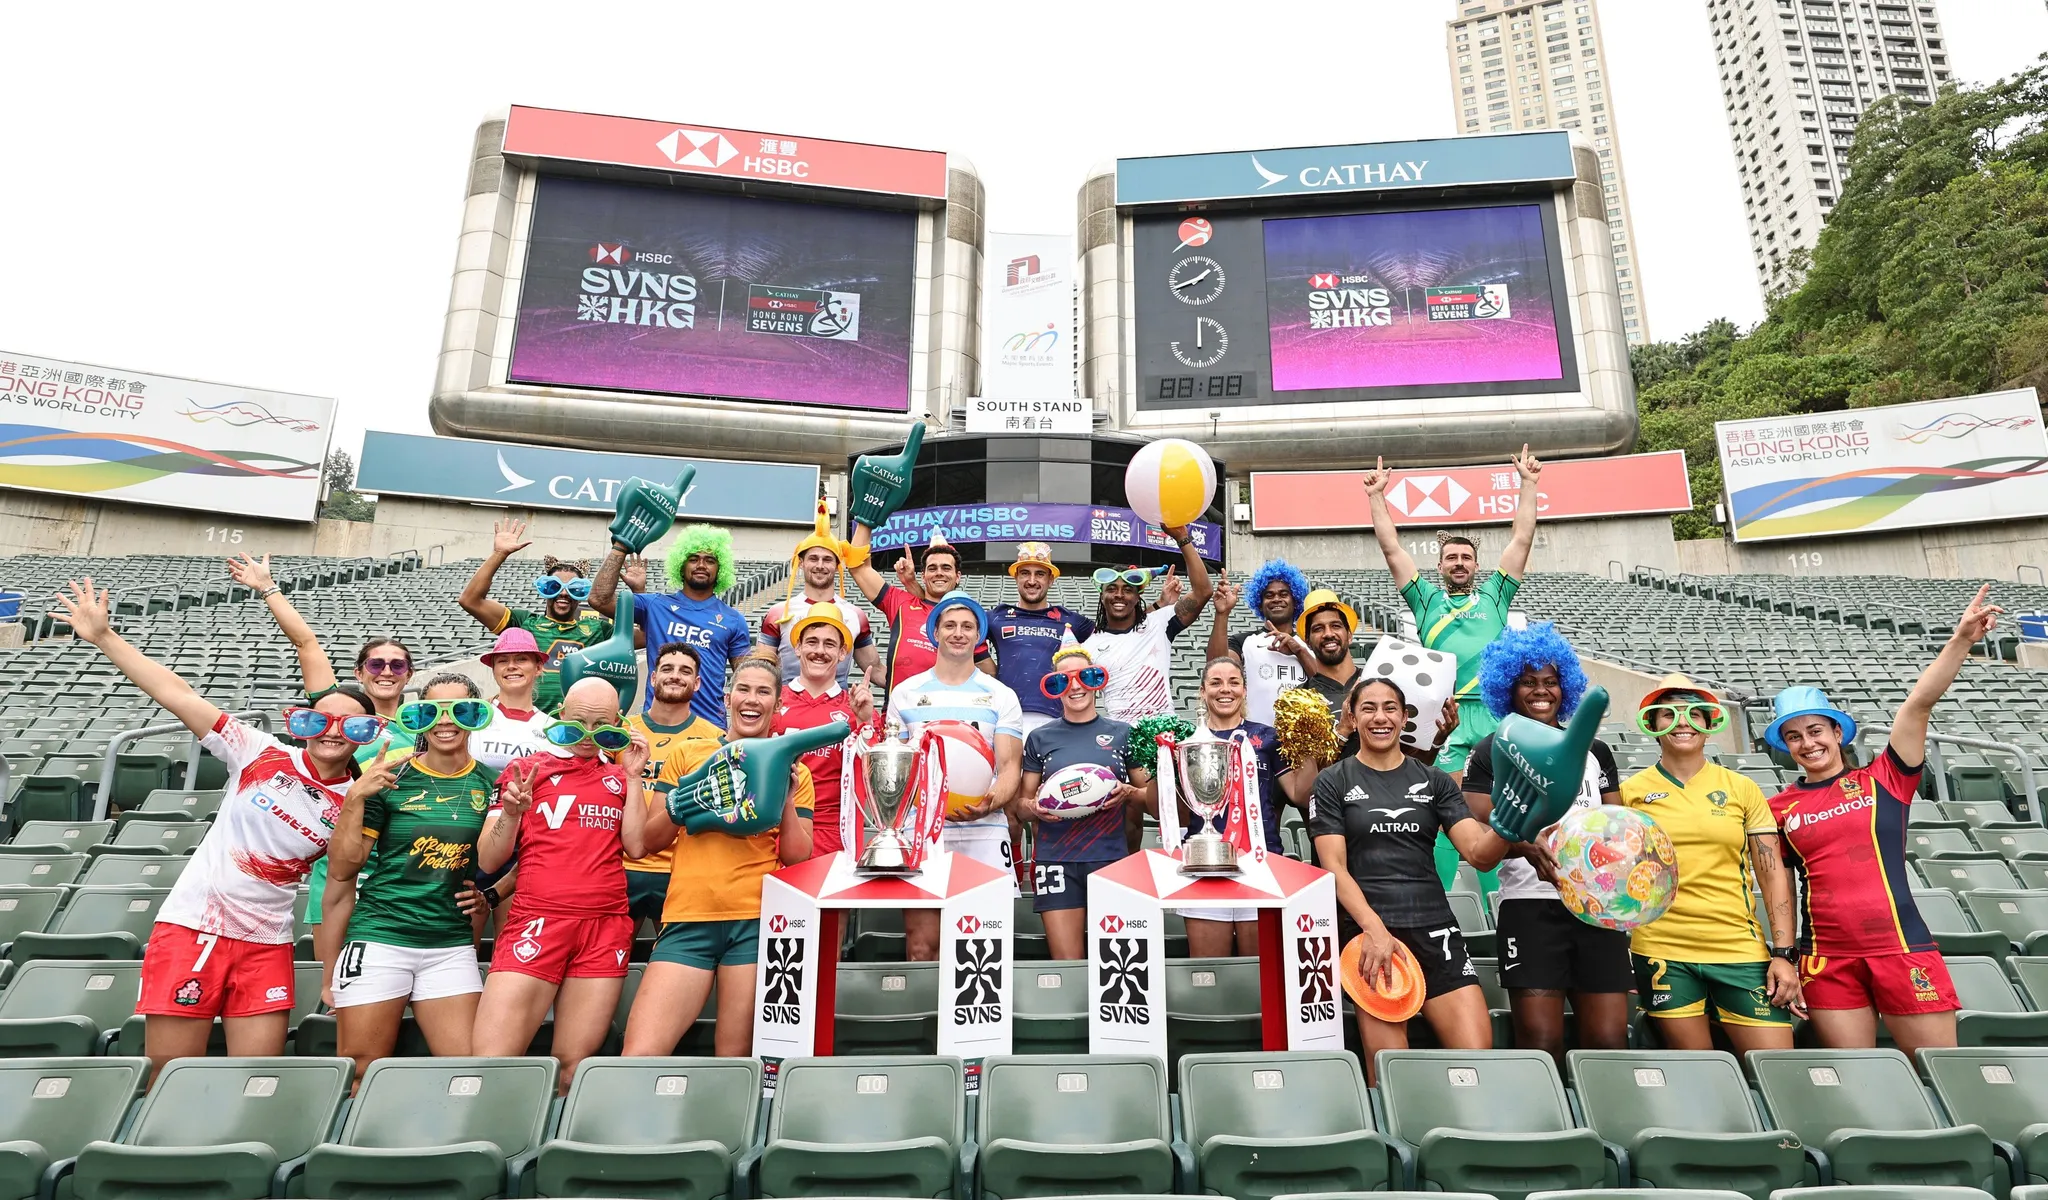 Hong Kong Rugby SVNS Captains